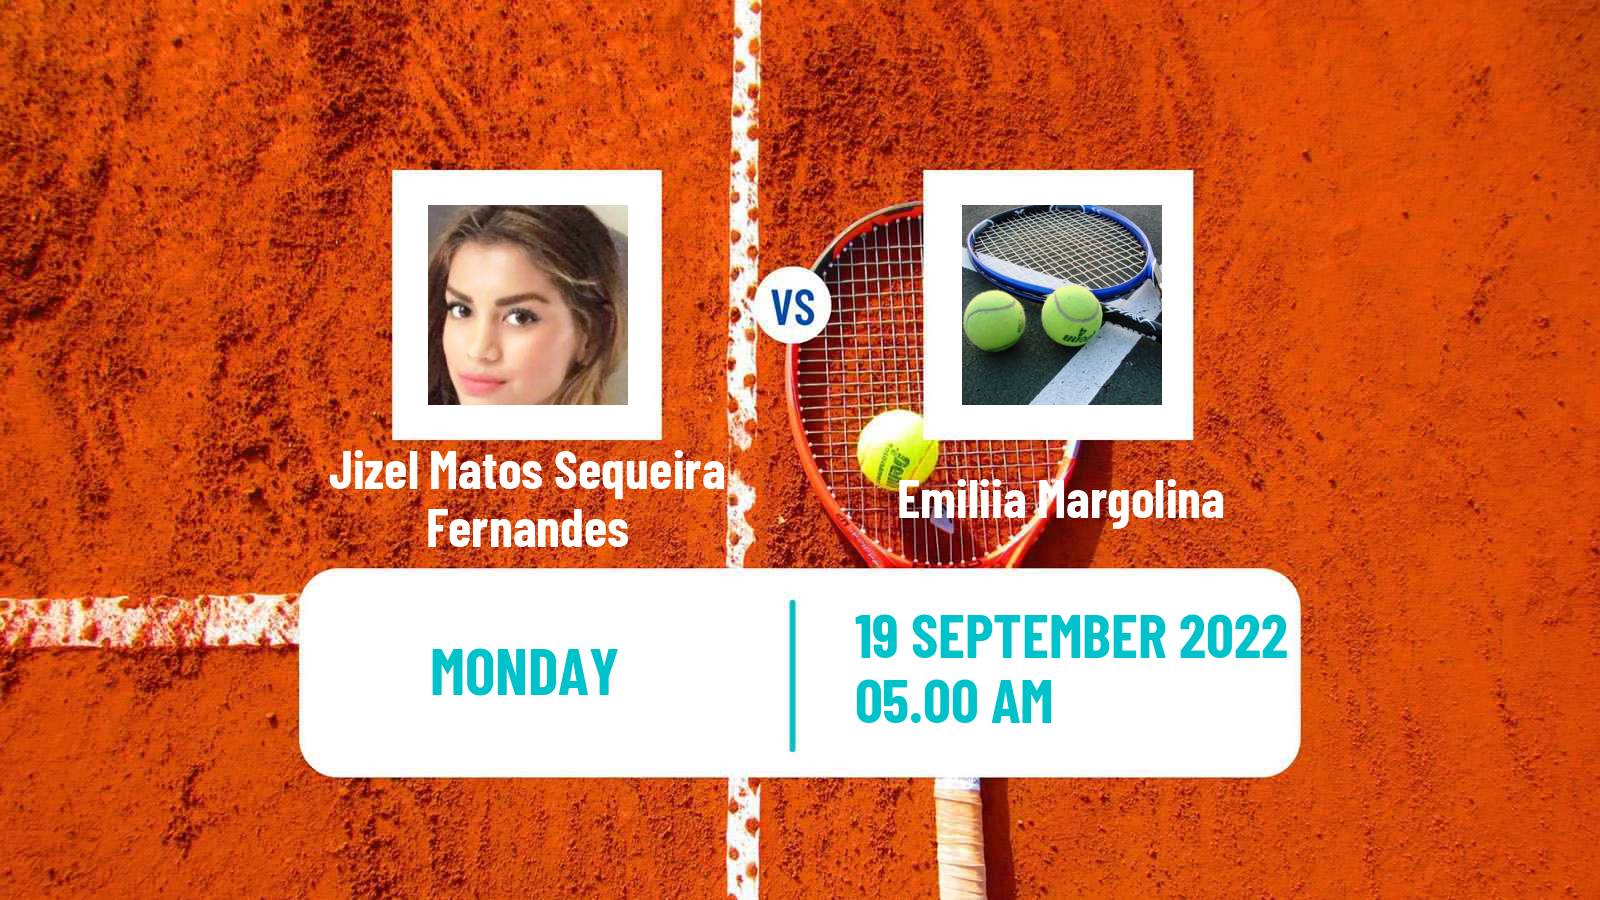 Tennis ITF Tournaments Jizel Matos Sequeira Fernandes - Emiliia Margolina